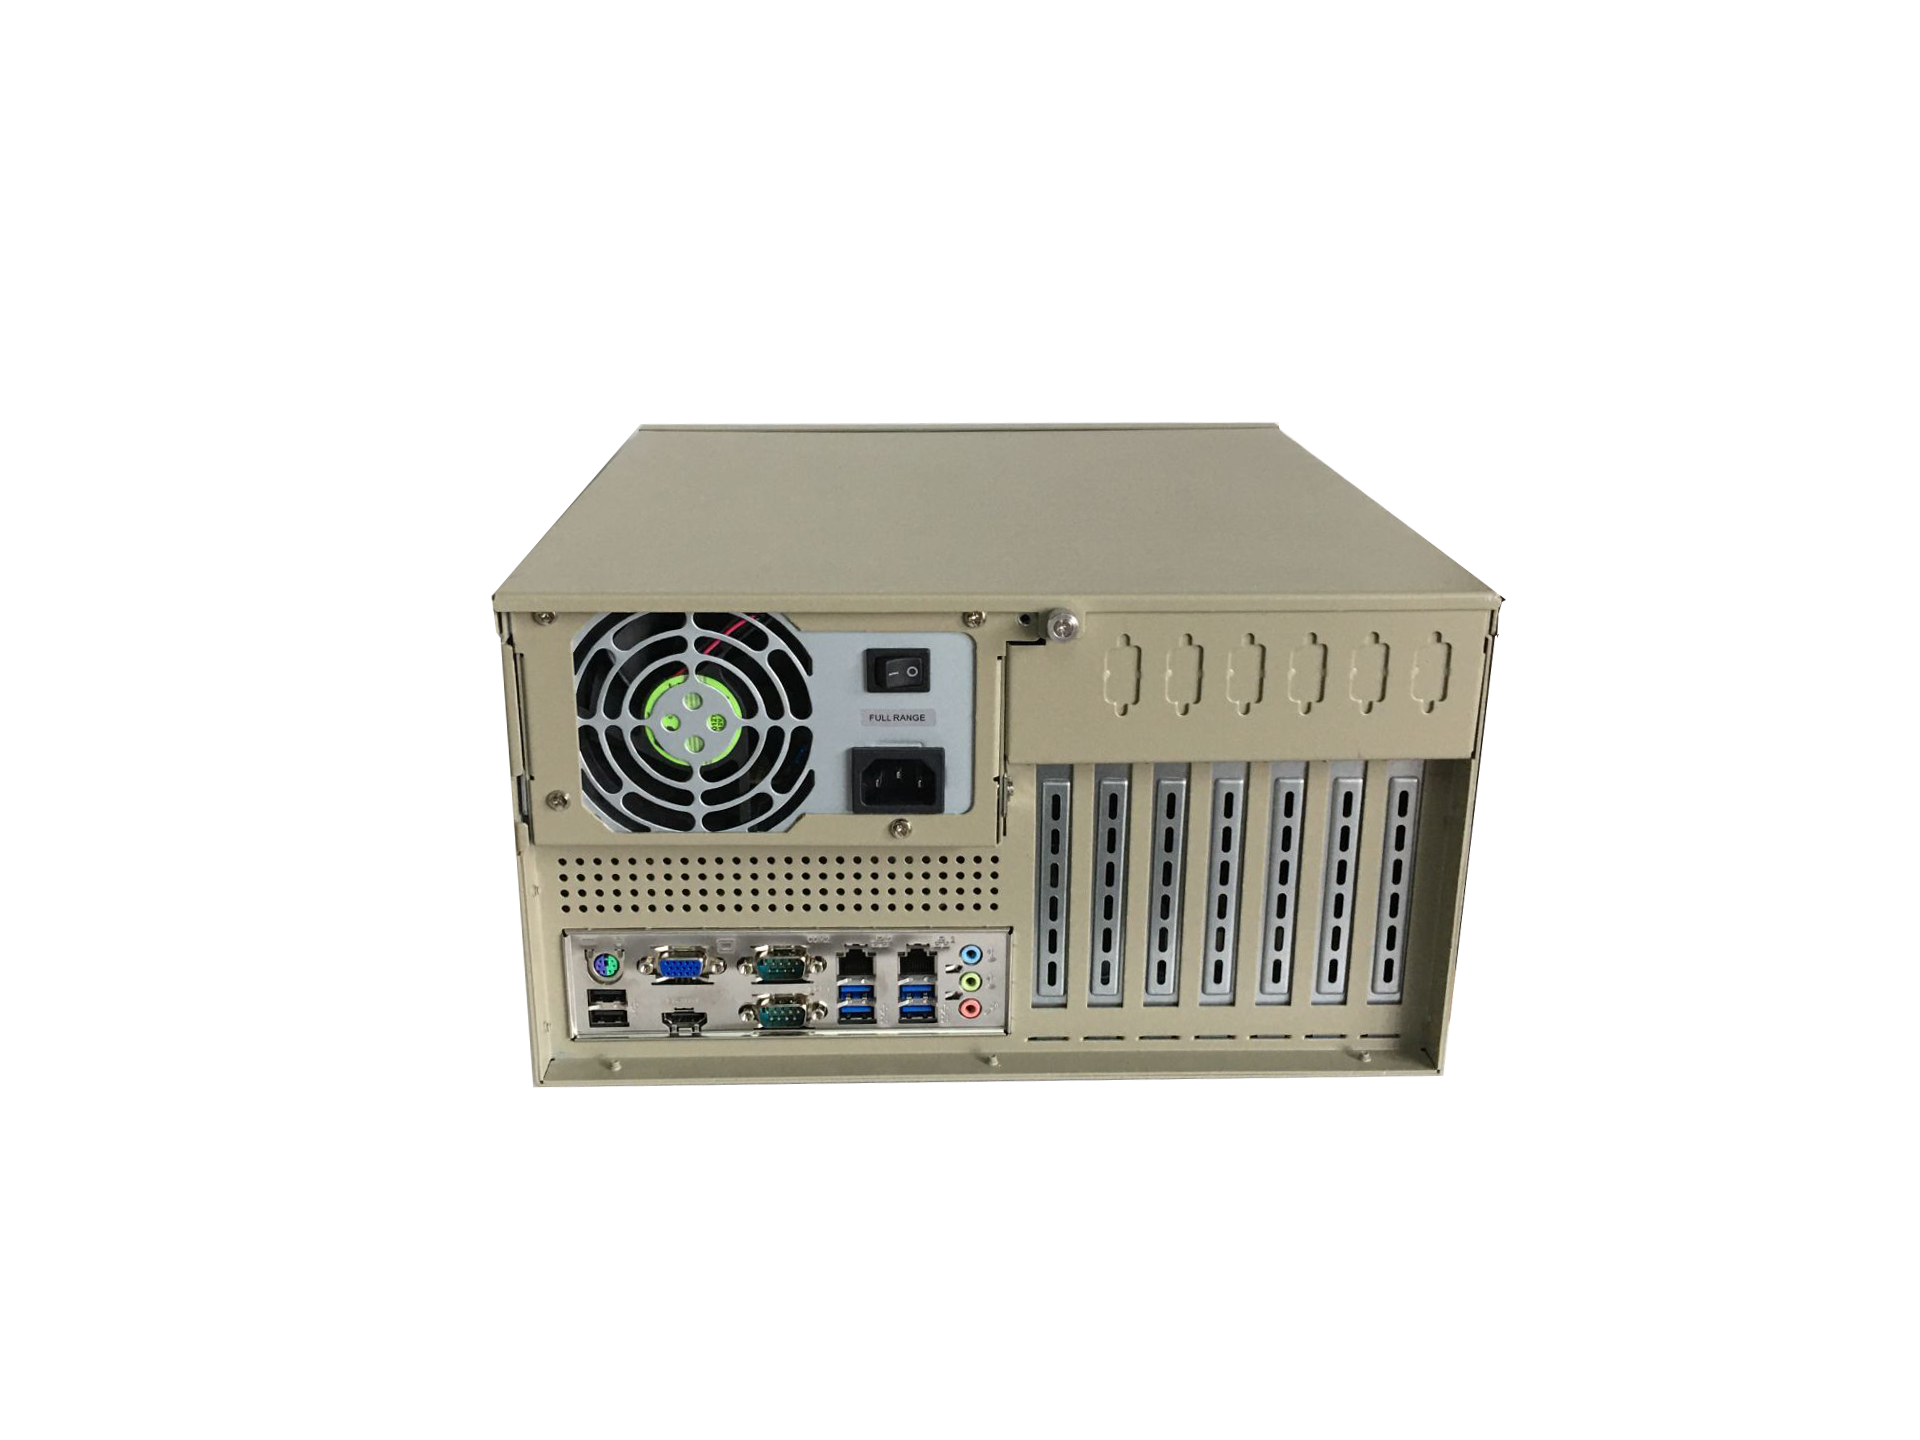 IPC-608-H110V1.0 壁挂式7槽位经济型工控机英特尔酷睿6代7代H110芯片组2英特尔网口6串口9USB5PCI多显示接口8路GP10嵌入式桌式安装高性能经济型工业计算机